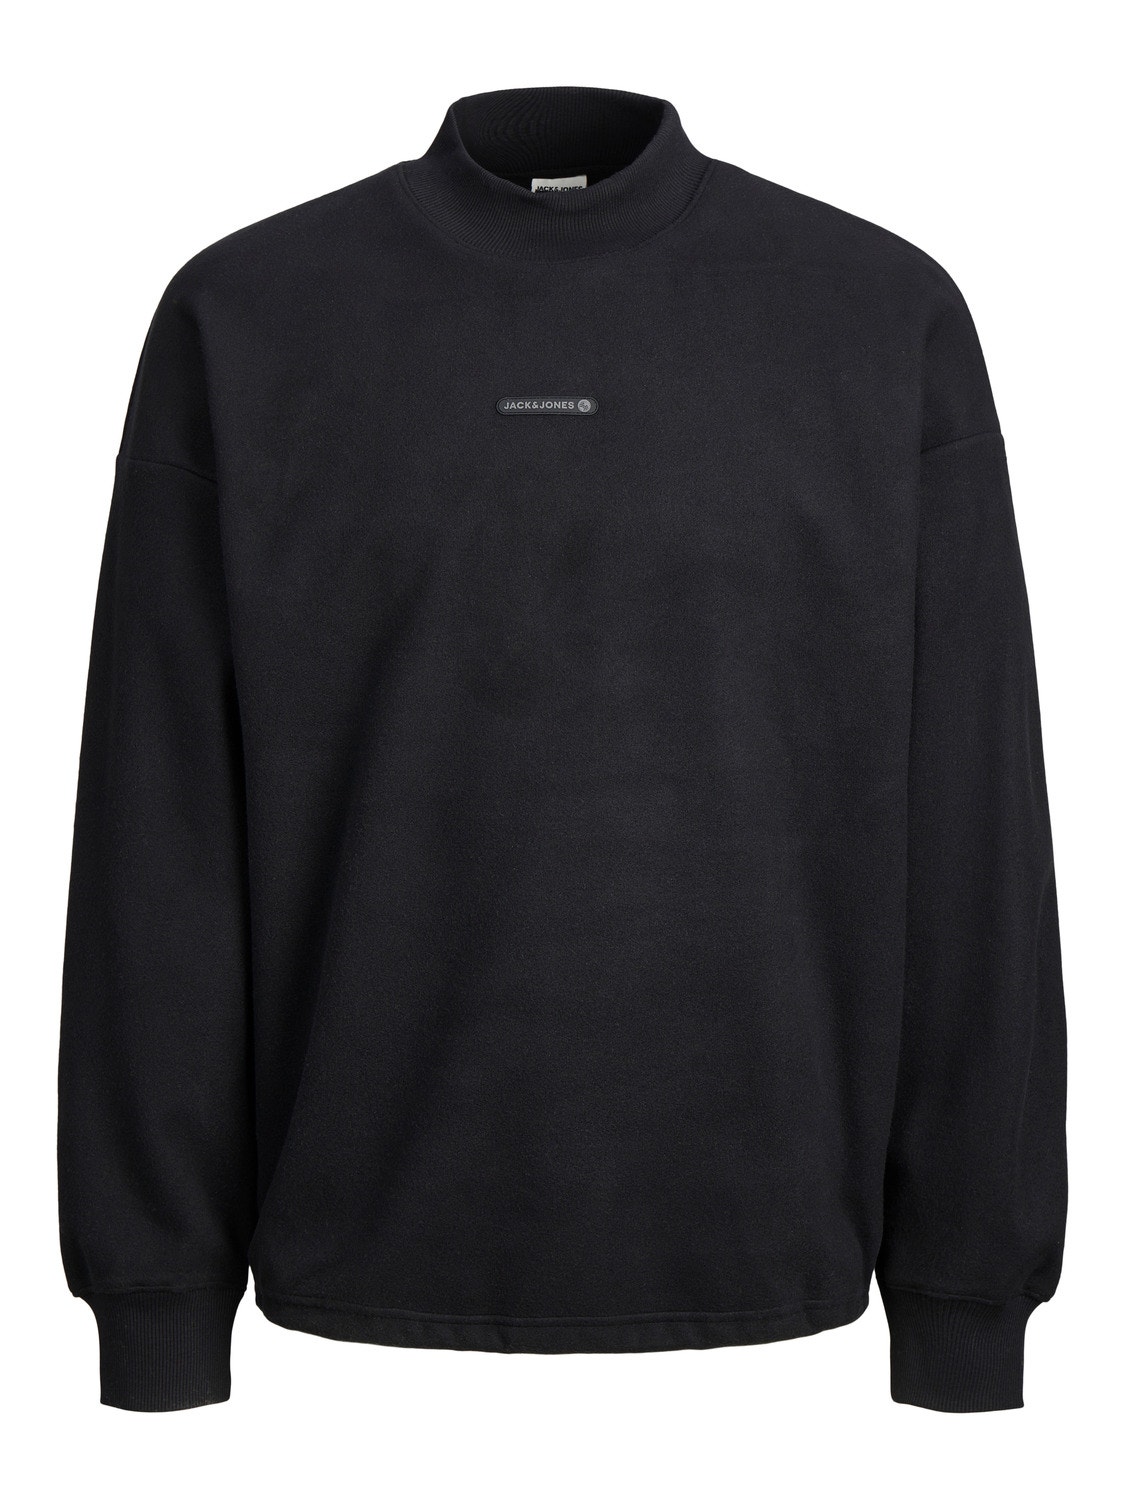 Jack & Jones Logo Crewn Neck Sweatshirt -Black - 12242194